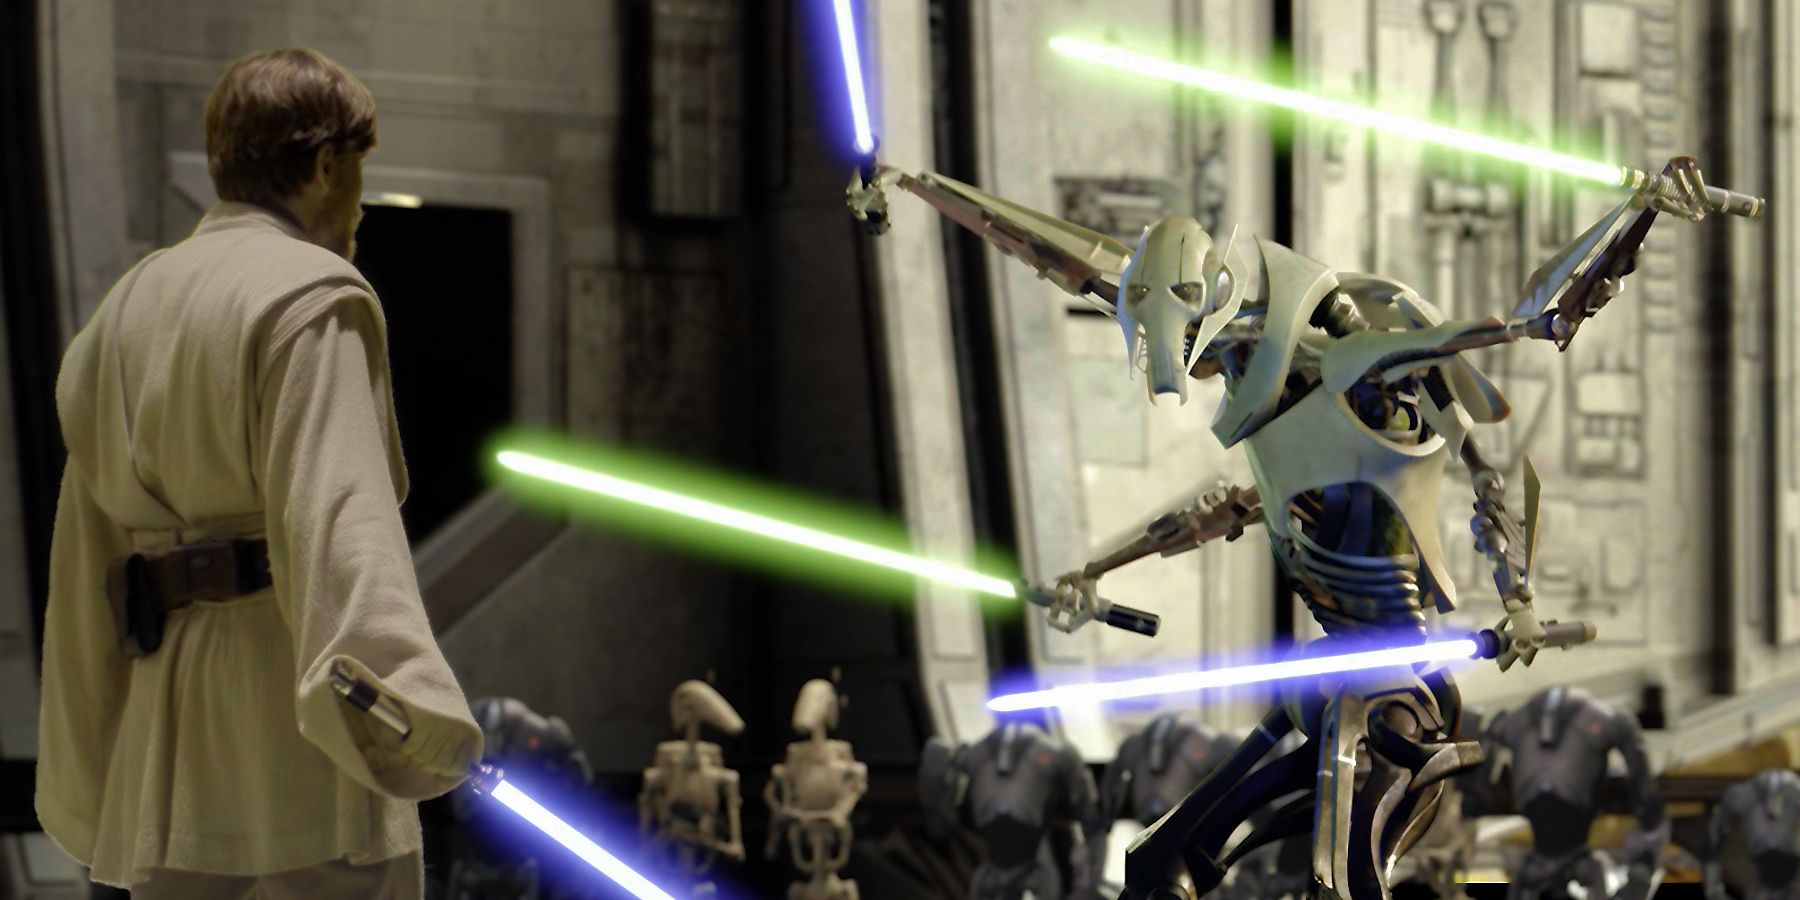 Obi-Wan Kenobi beginning a battle with General Grievous in Star Wars Revenge Of The Sith